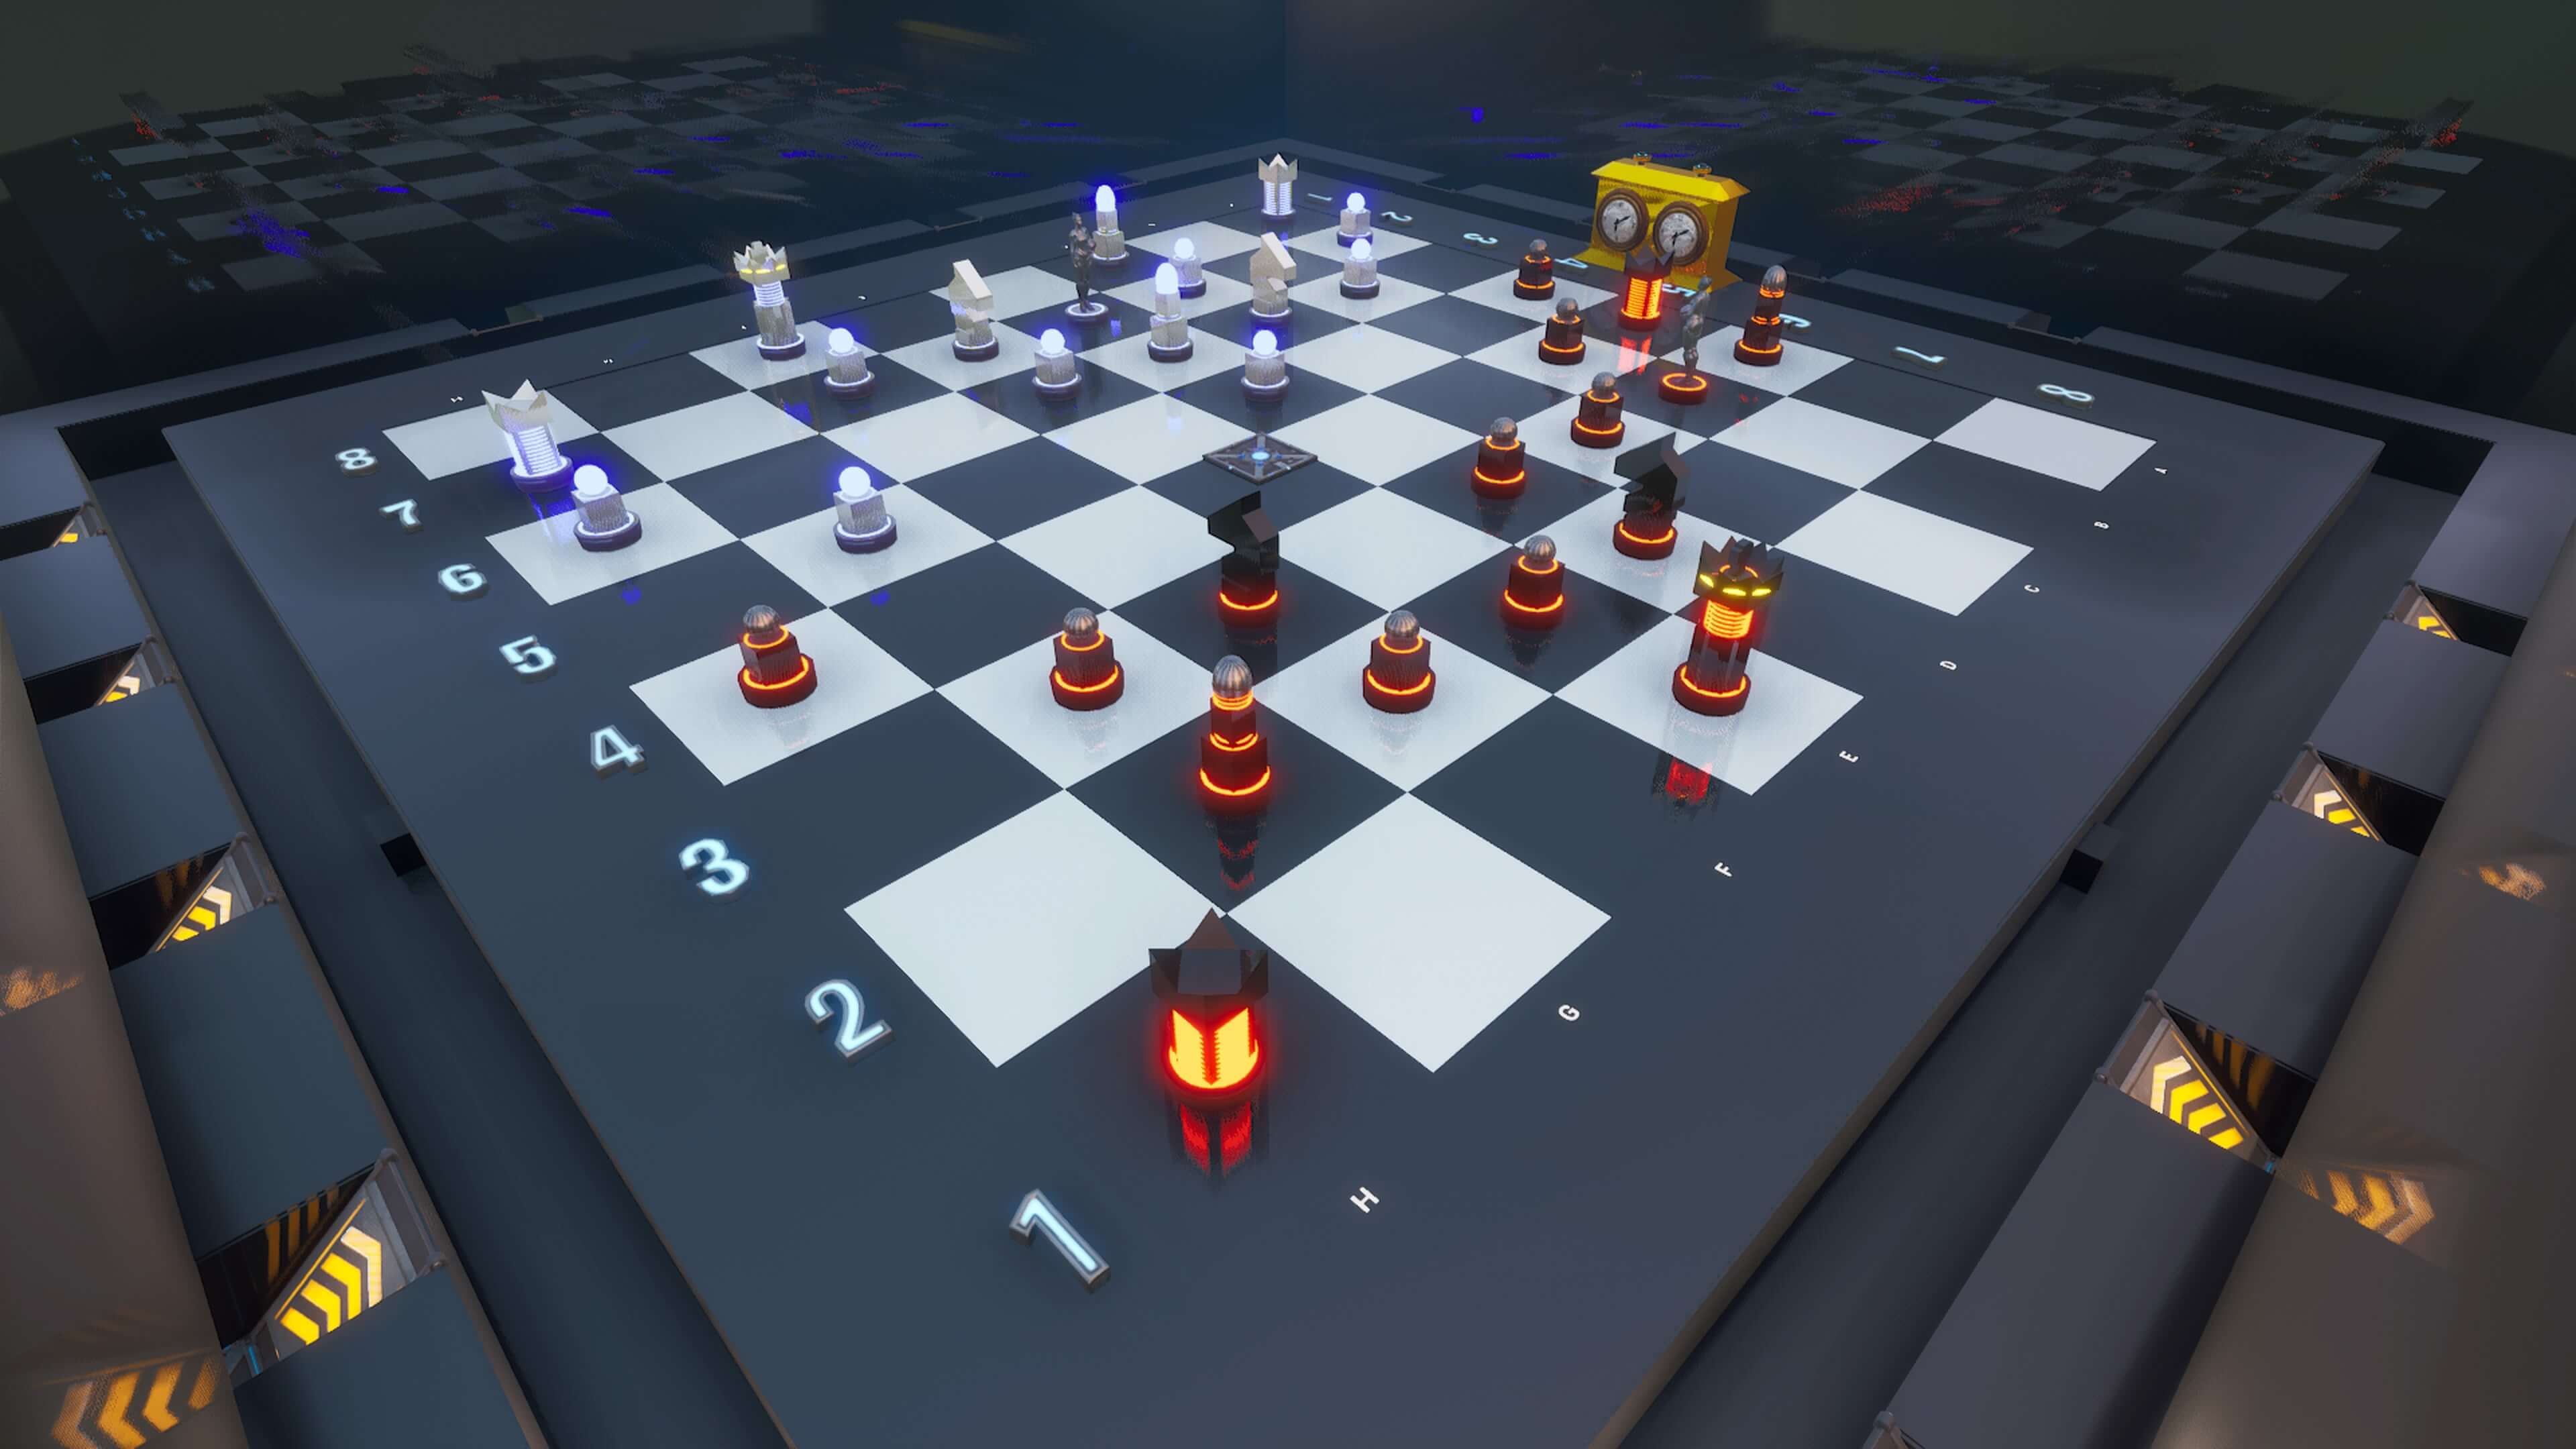 Chess Arena - Fortnite Creative Map Code - Dropnite